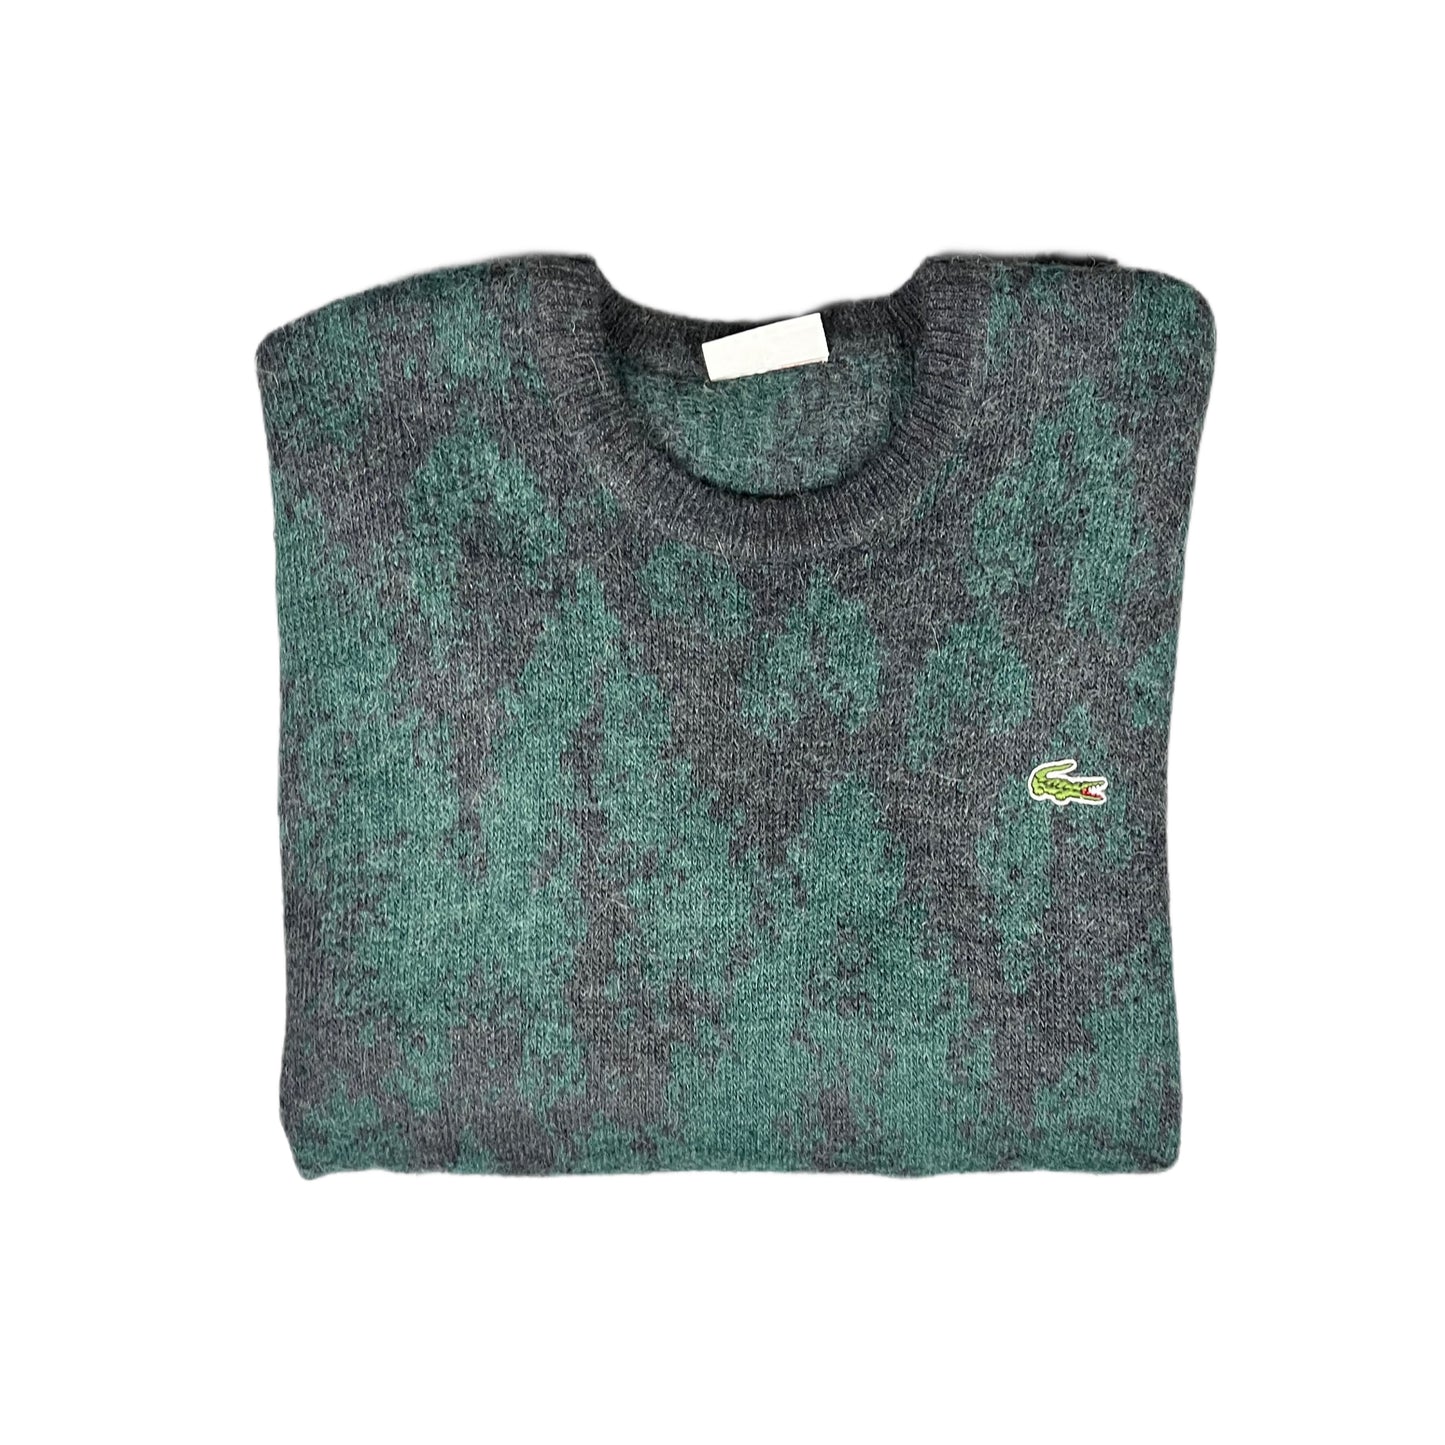 Lacoste Knit Sweater Vintage Chemise 80s "Camo"